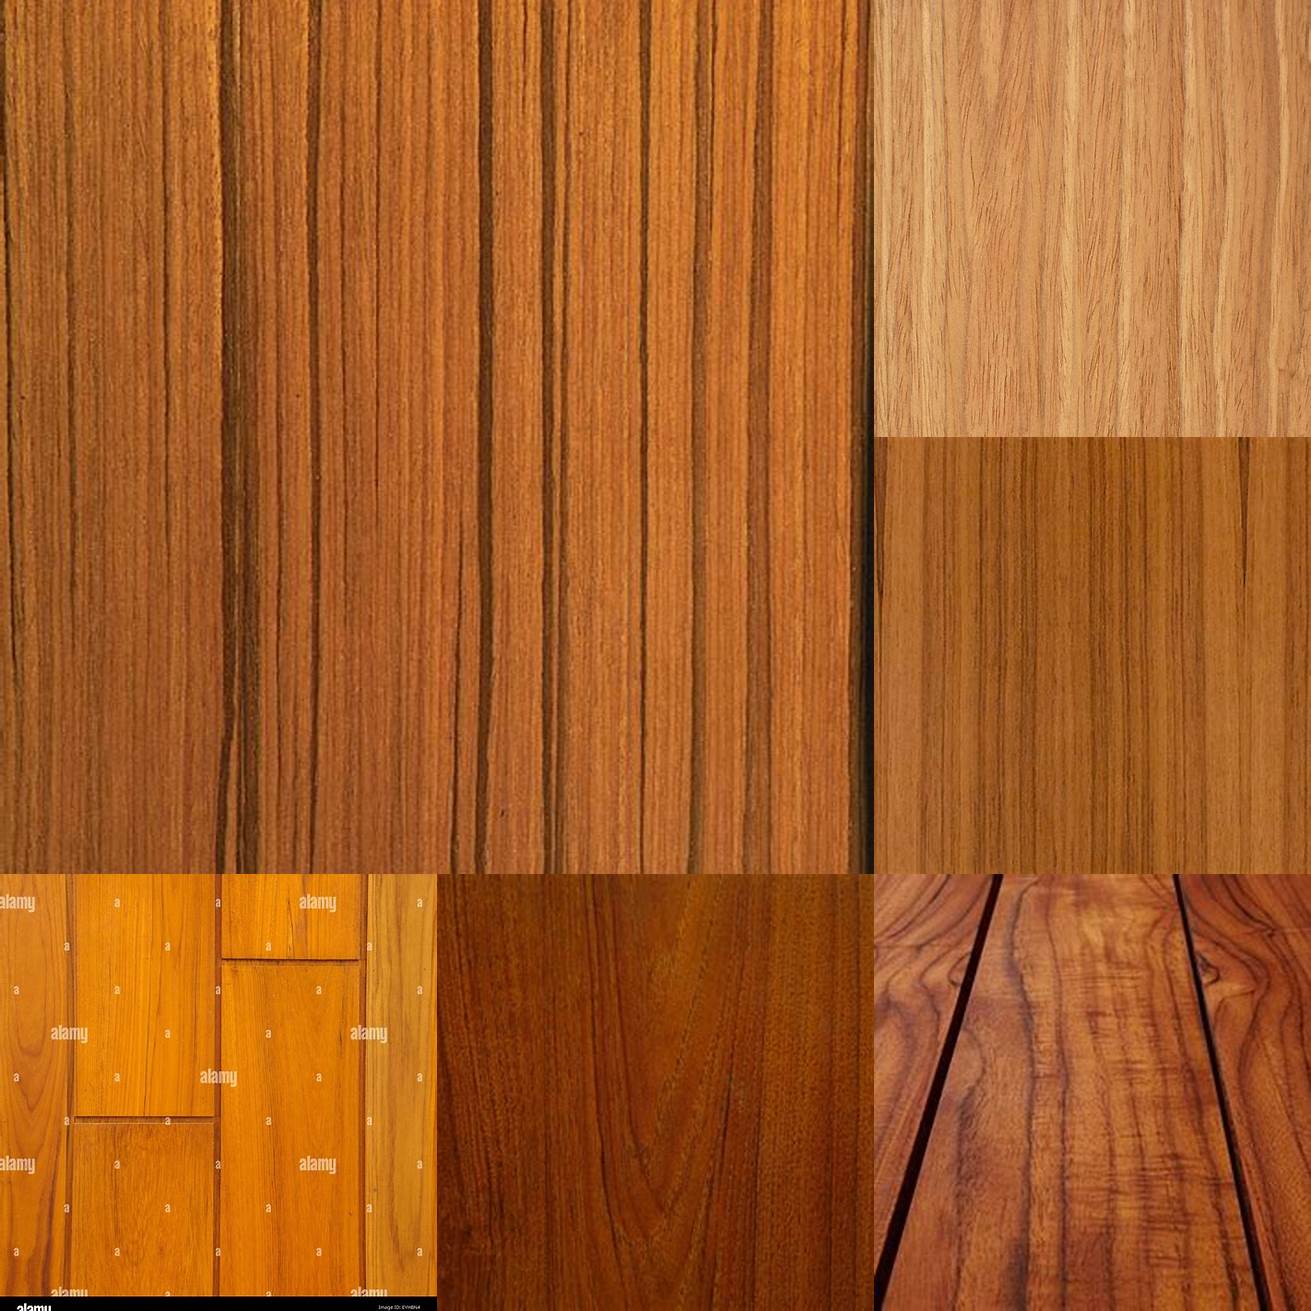 A close-up of a teak furnitures grain pattern